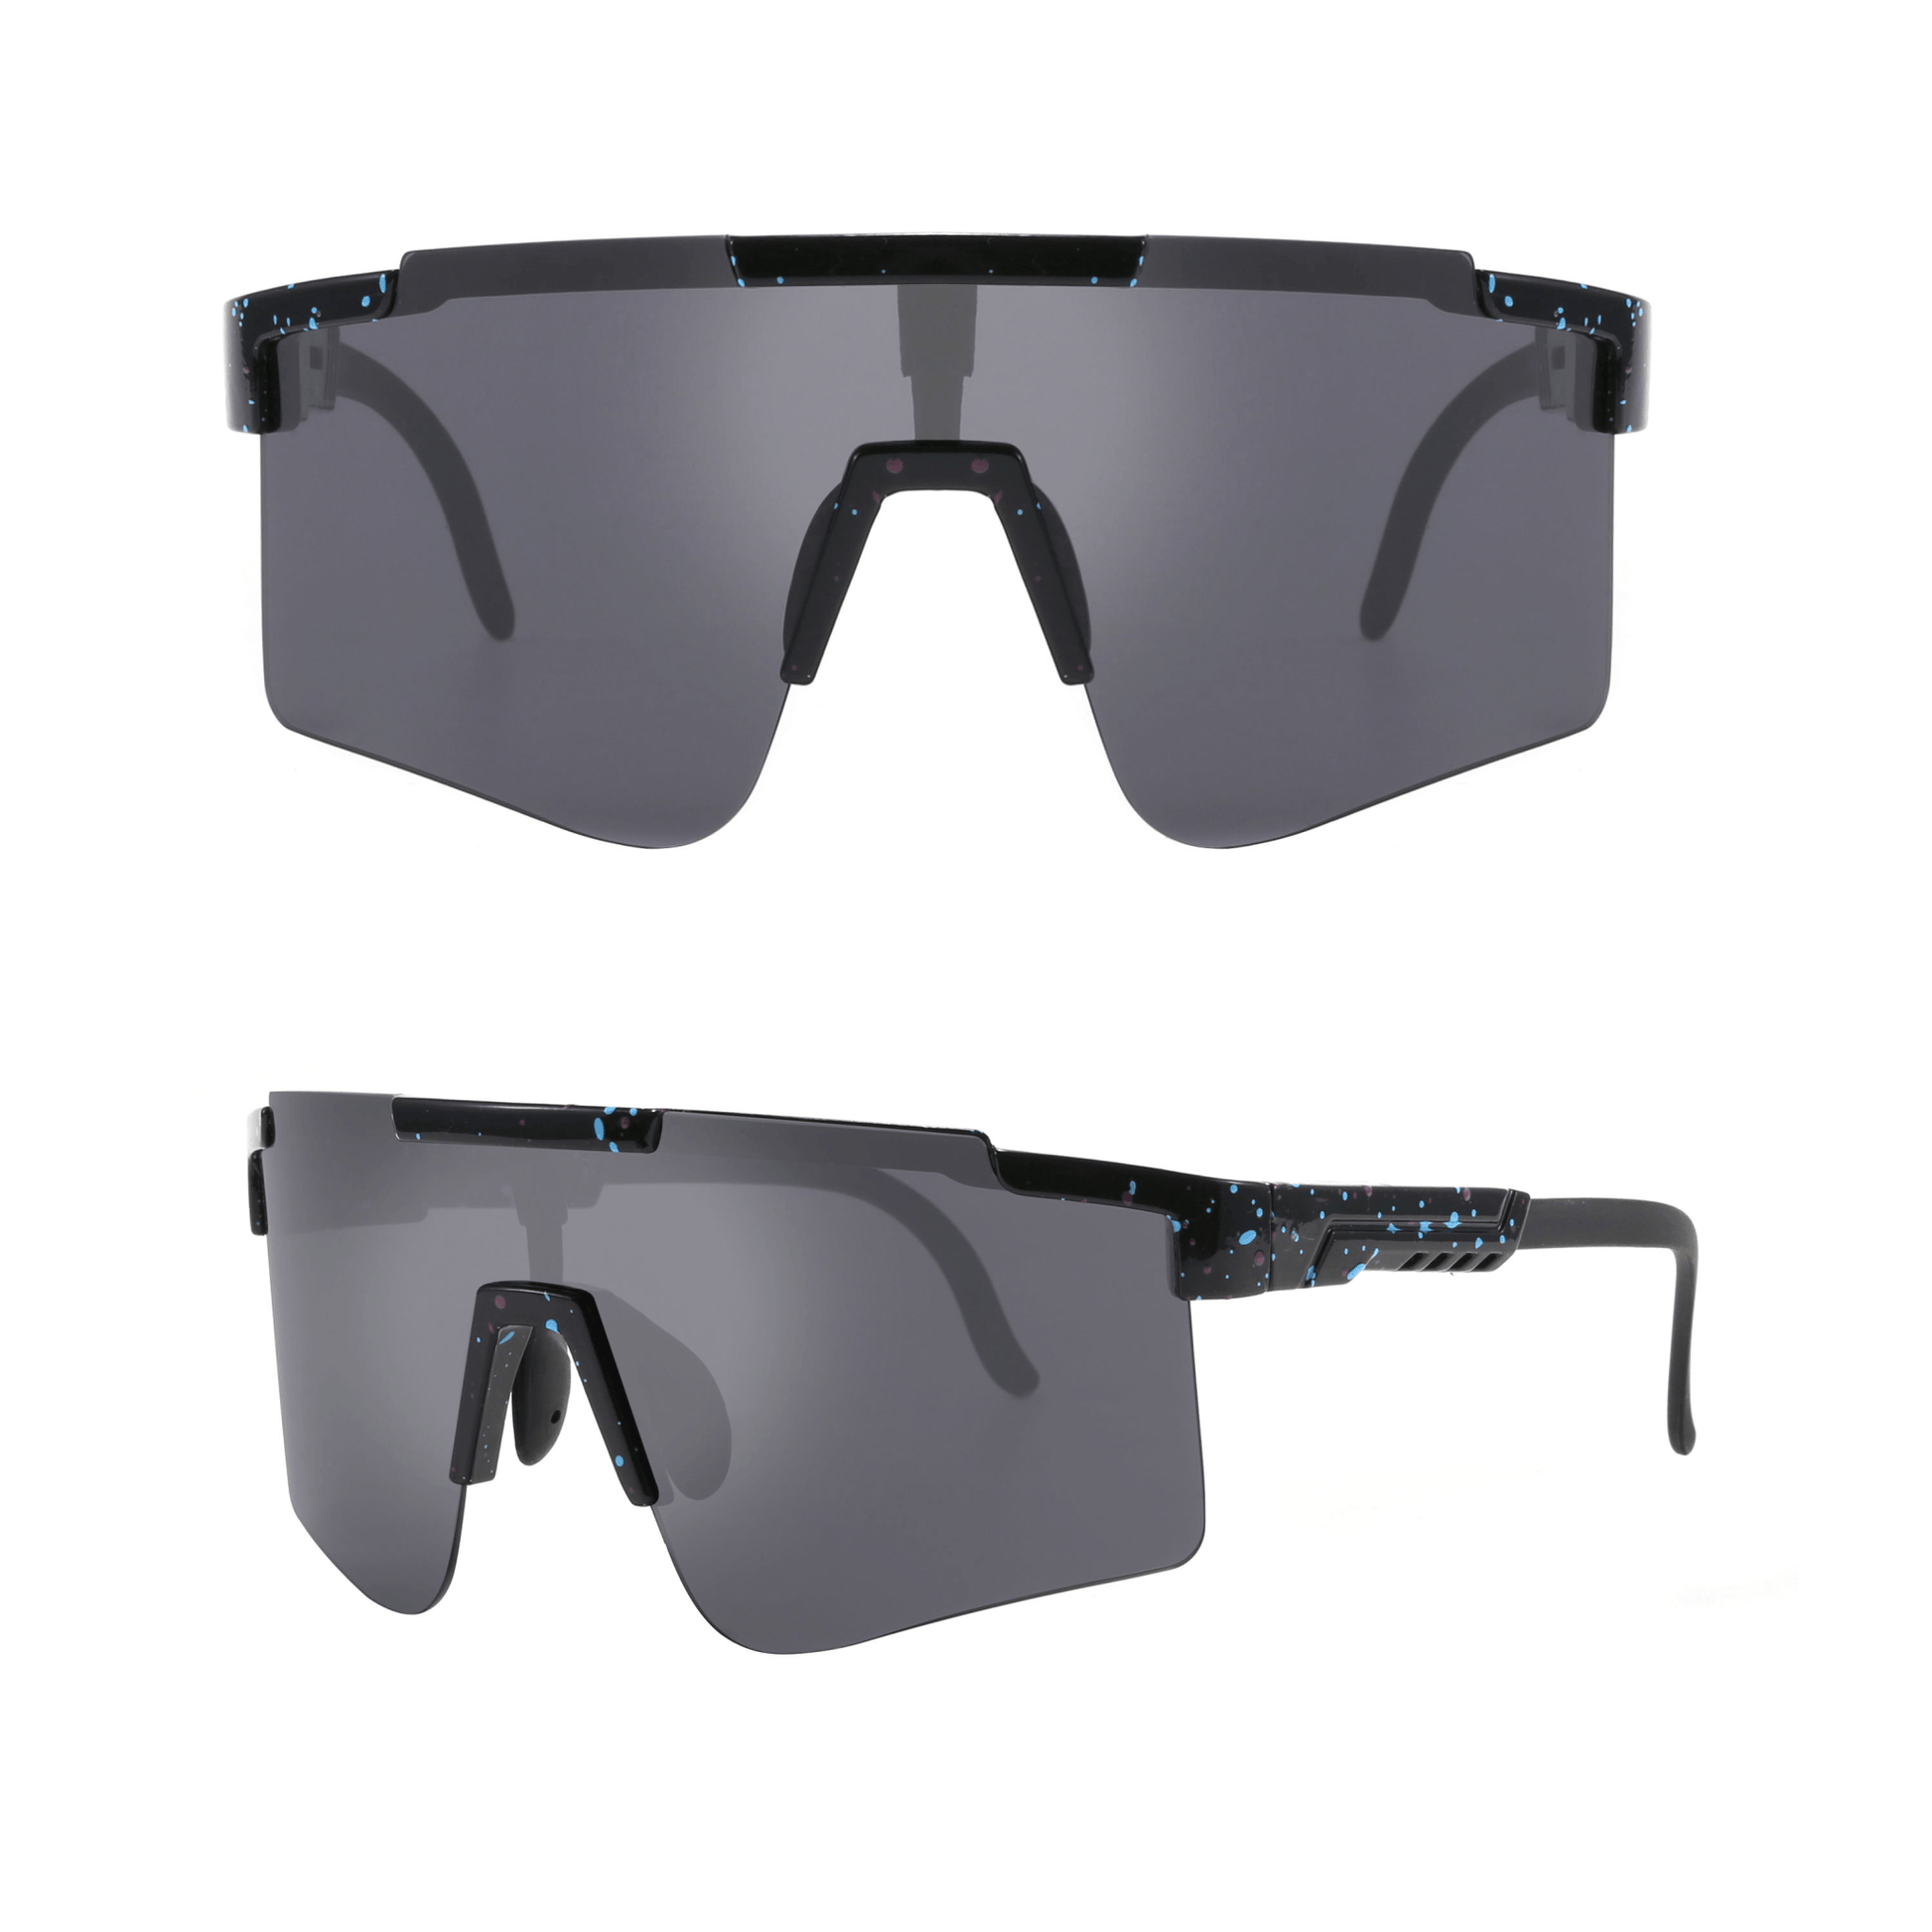 Salvador tinted sunglasses in grey